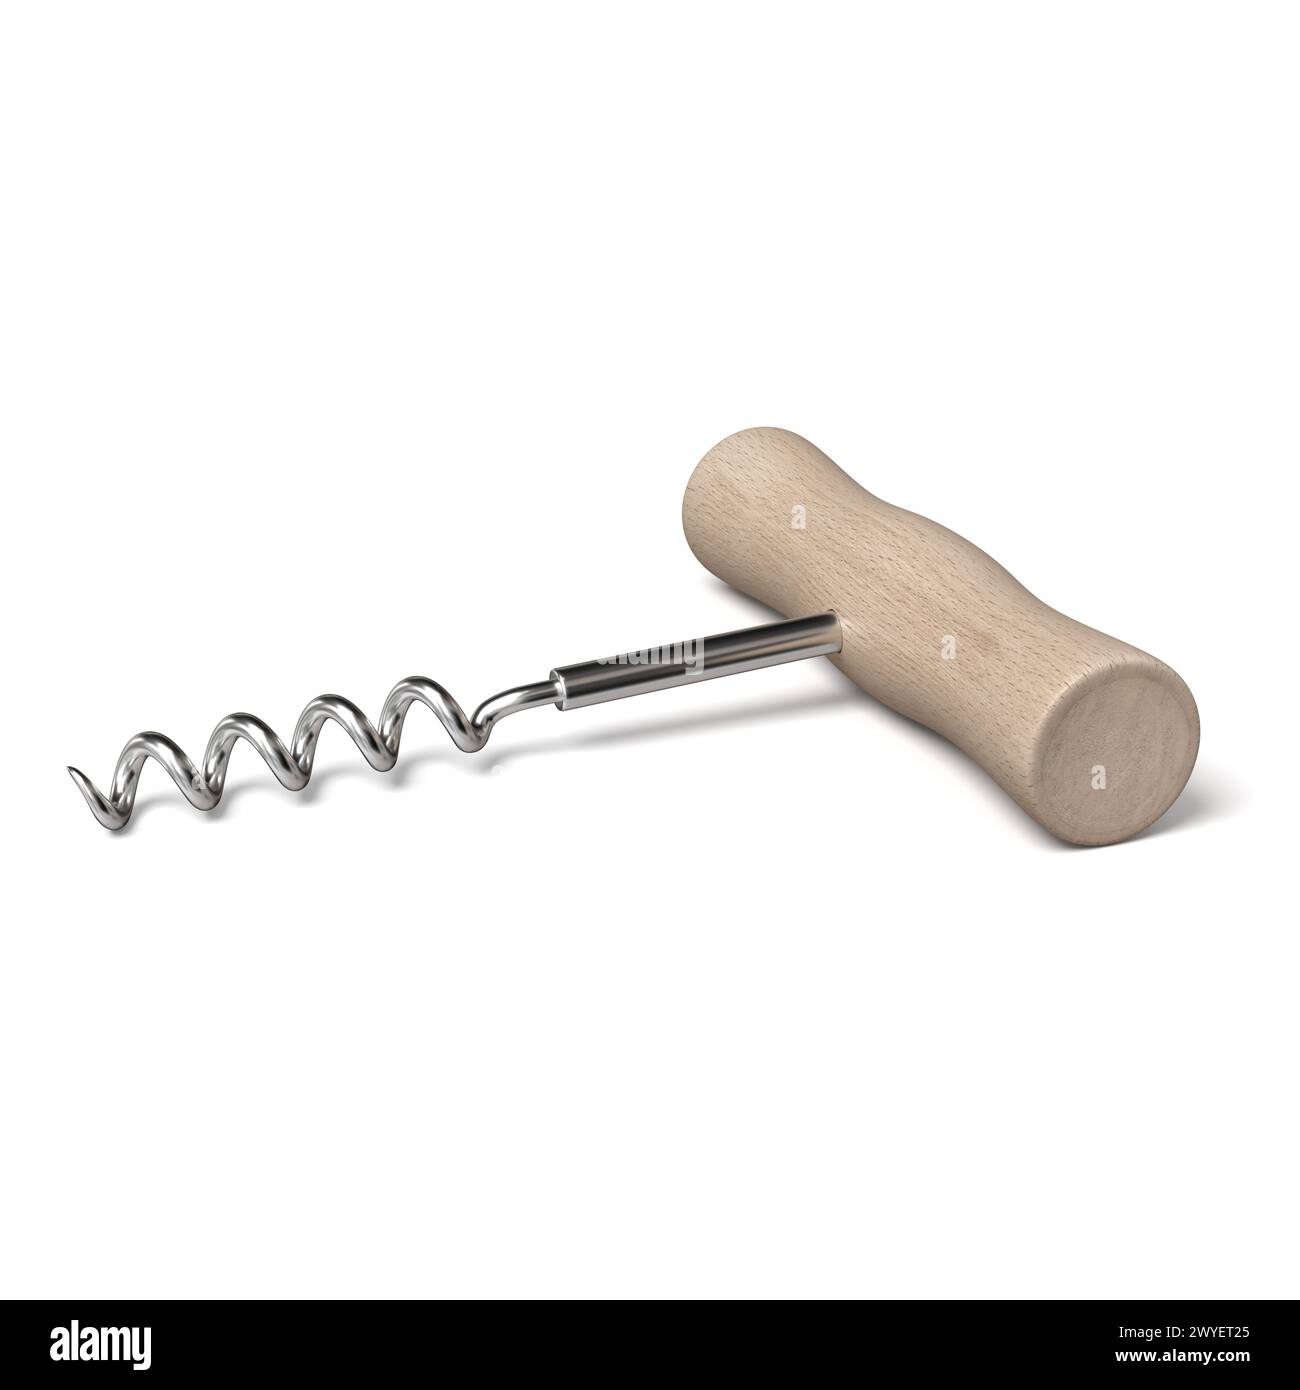 Sleek corkscrew with a wooden grip Stock Photo